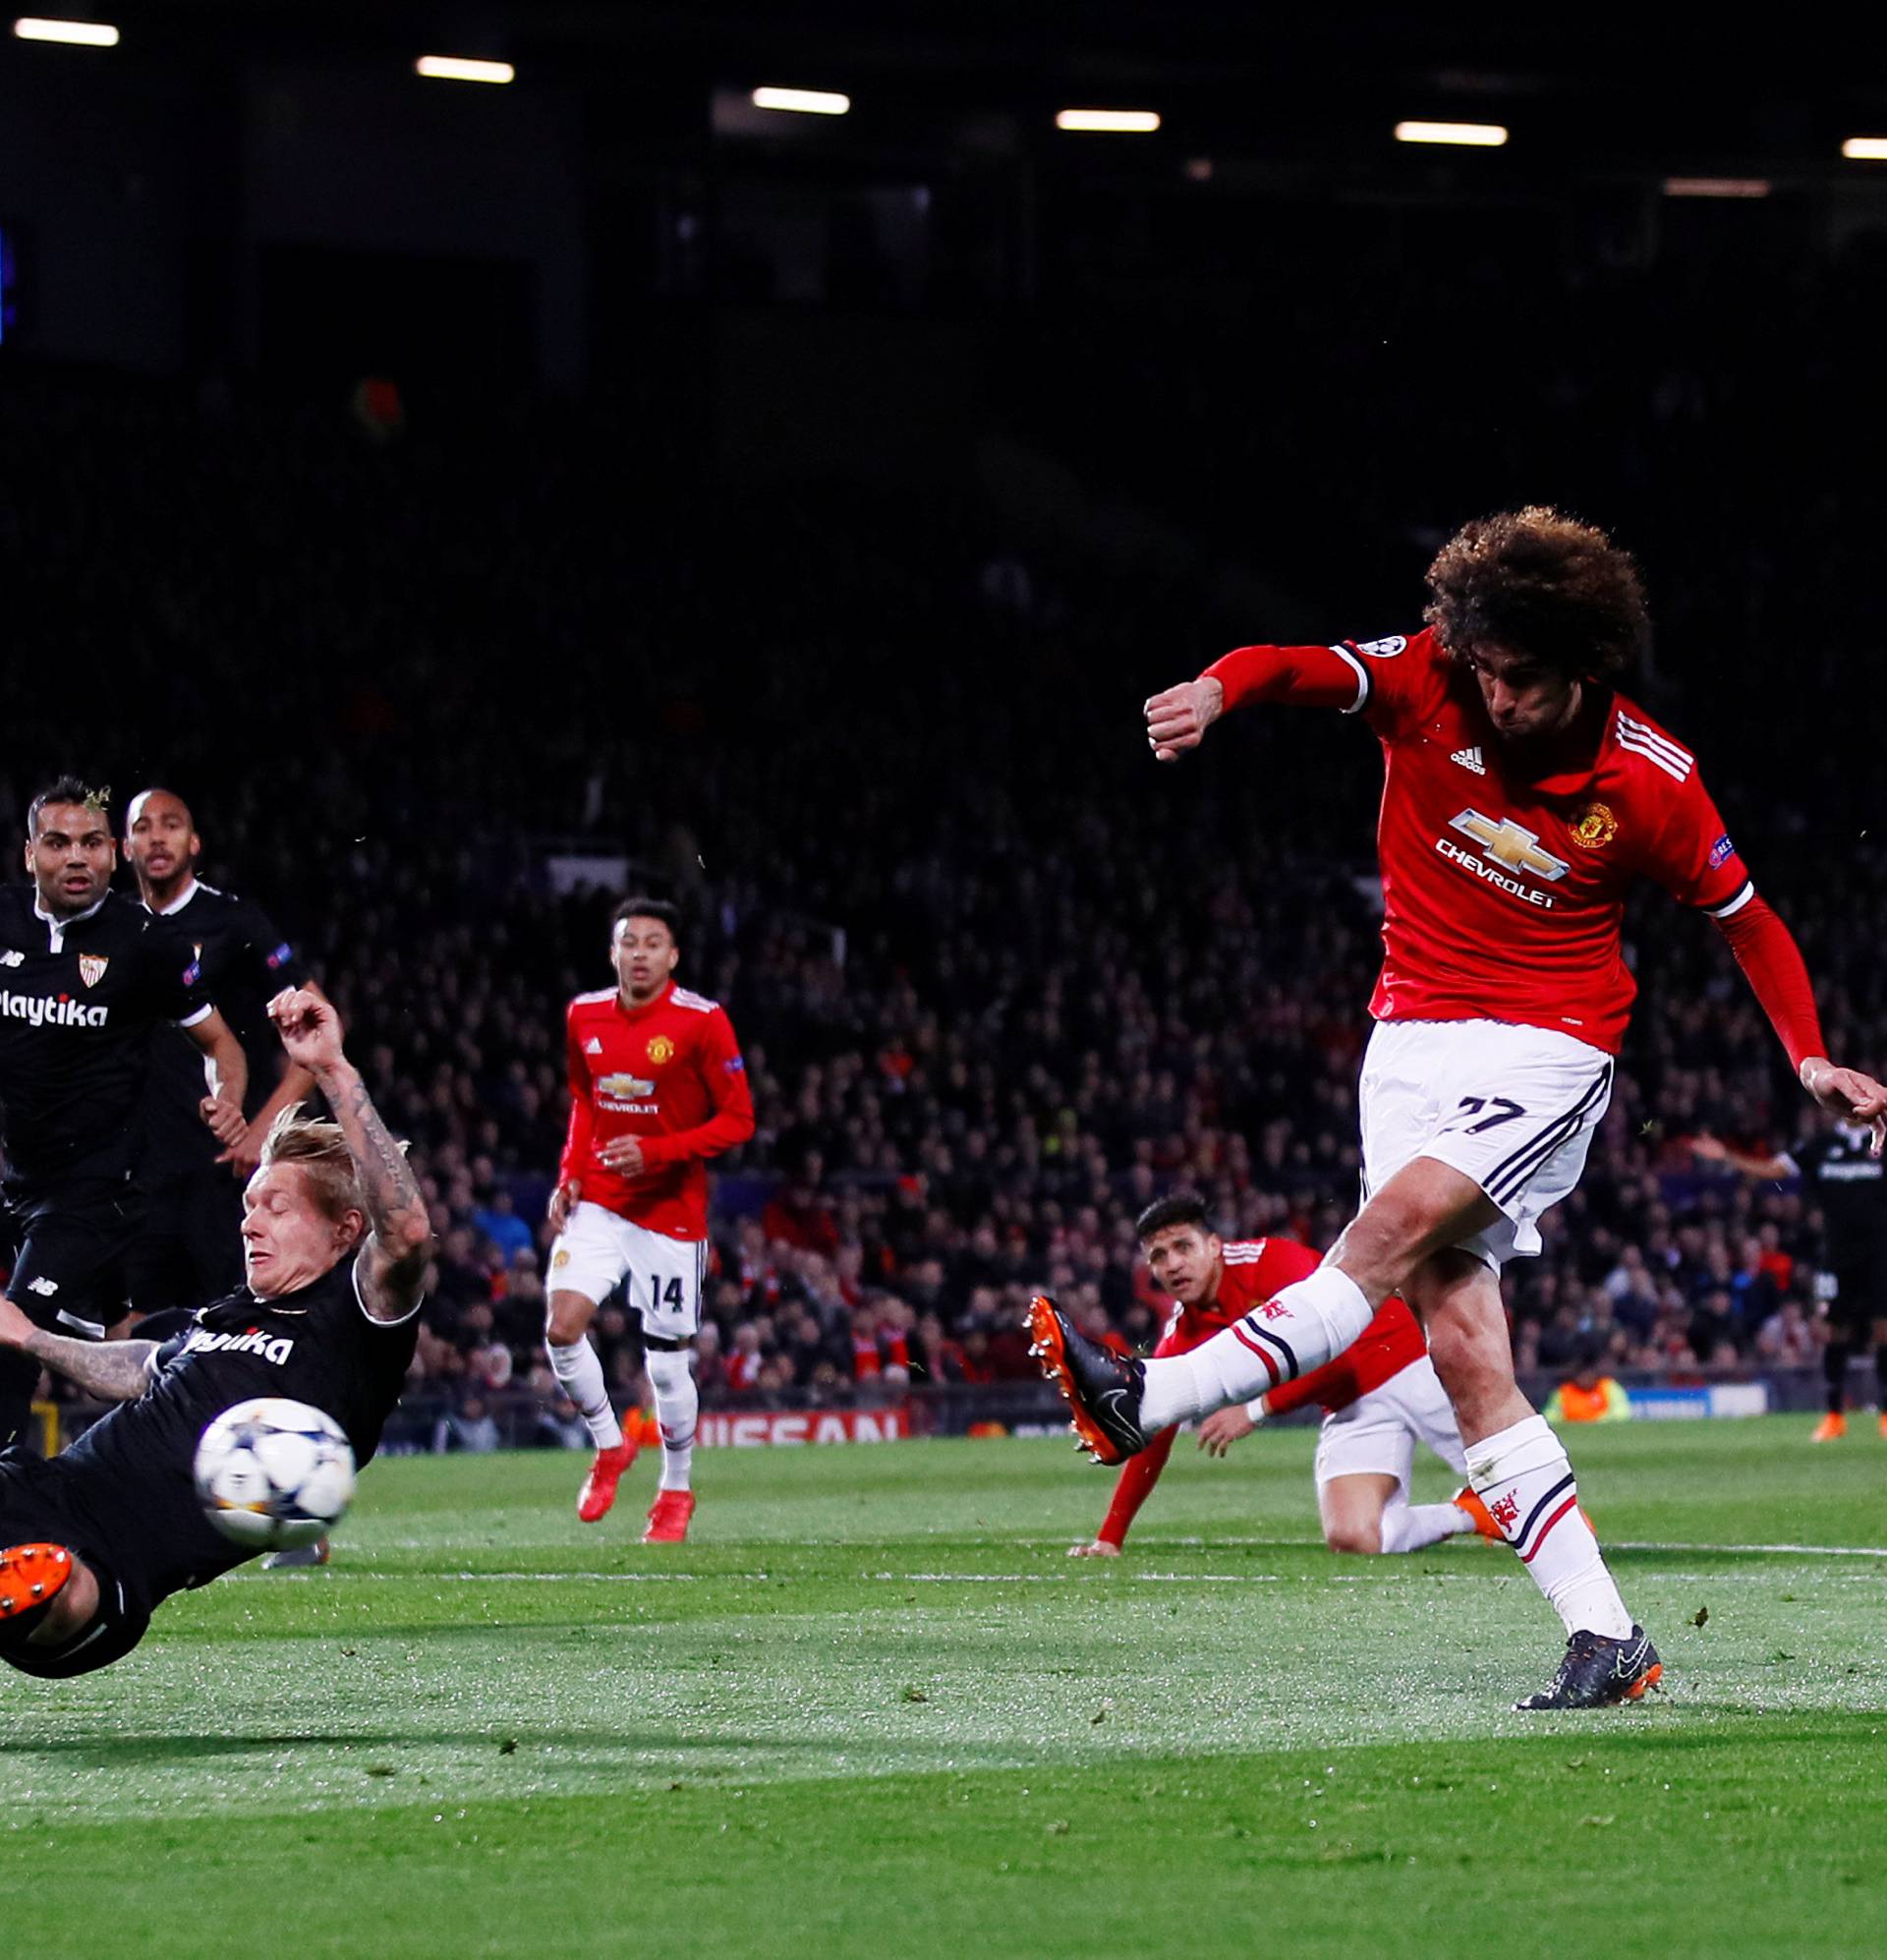 Champions League Round of 16 Second Leg - Manchester United vs Sevilla